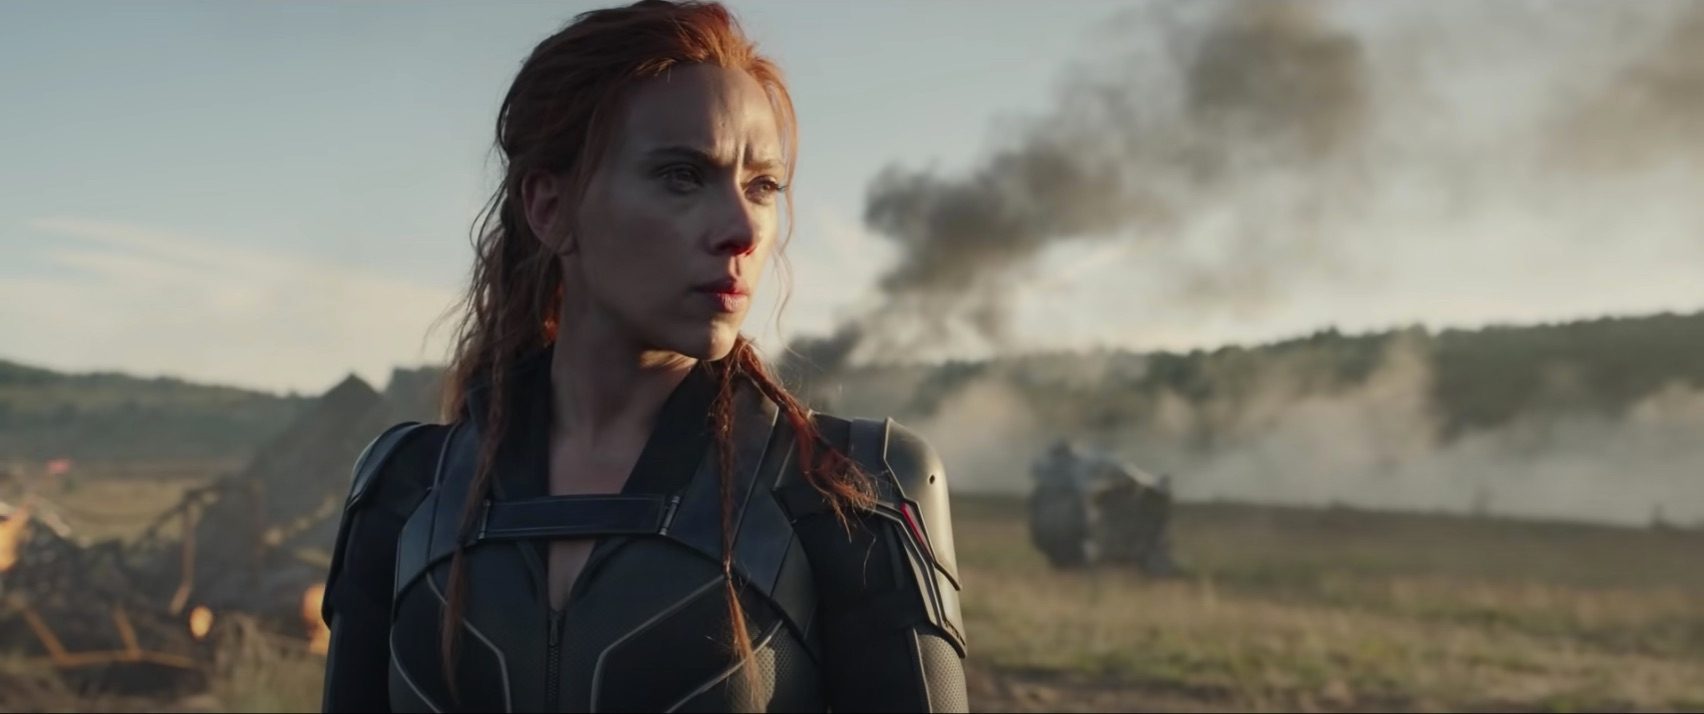 Assassin-turned-Avenger ‘Black Widow’ finally takes movie spotlight